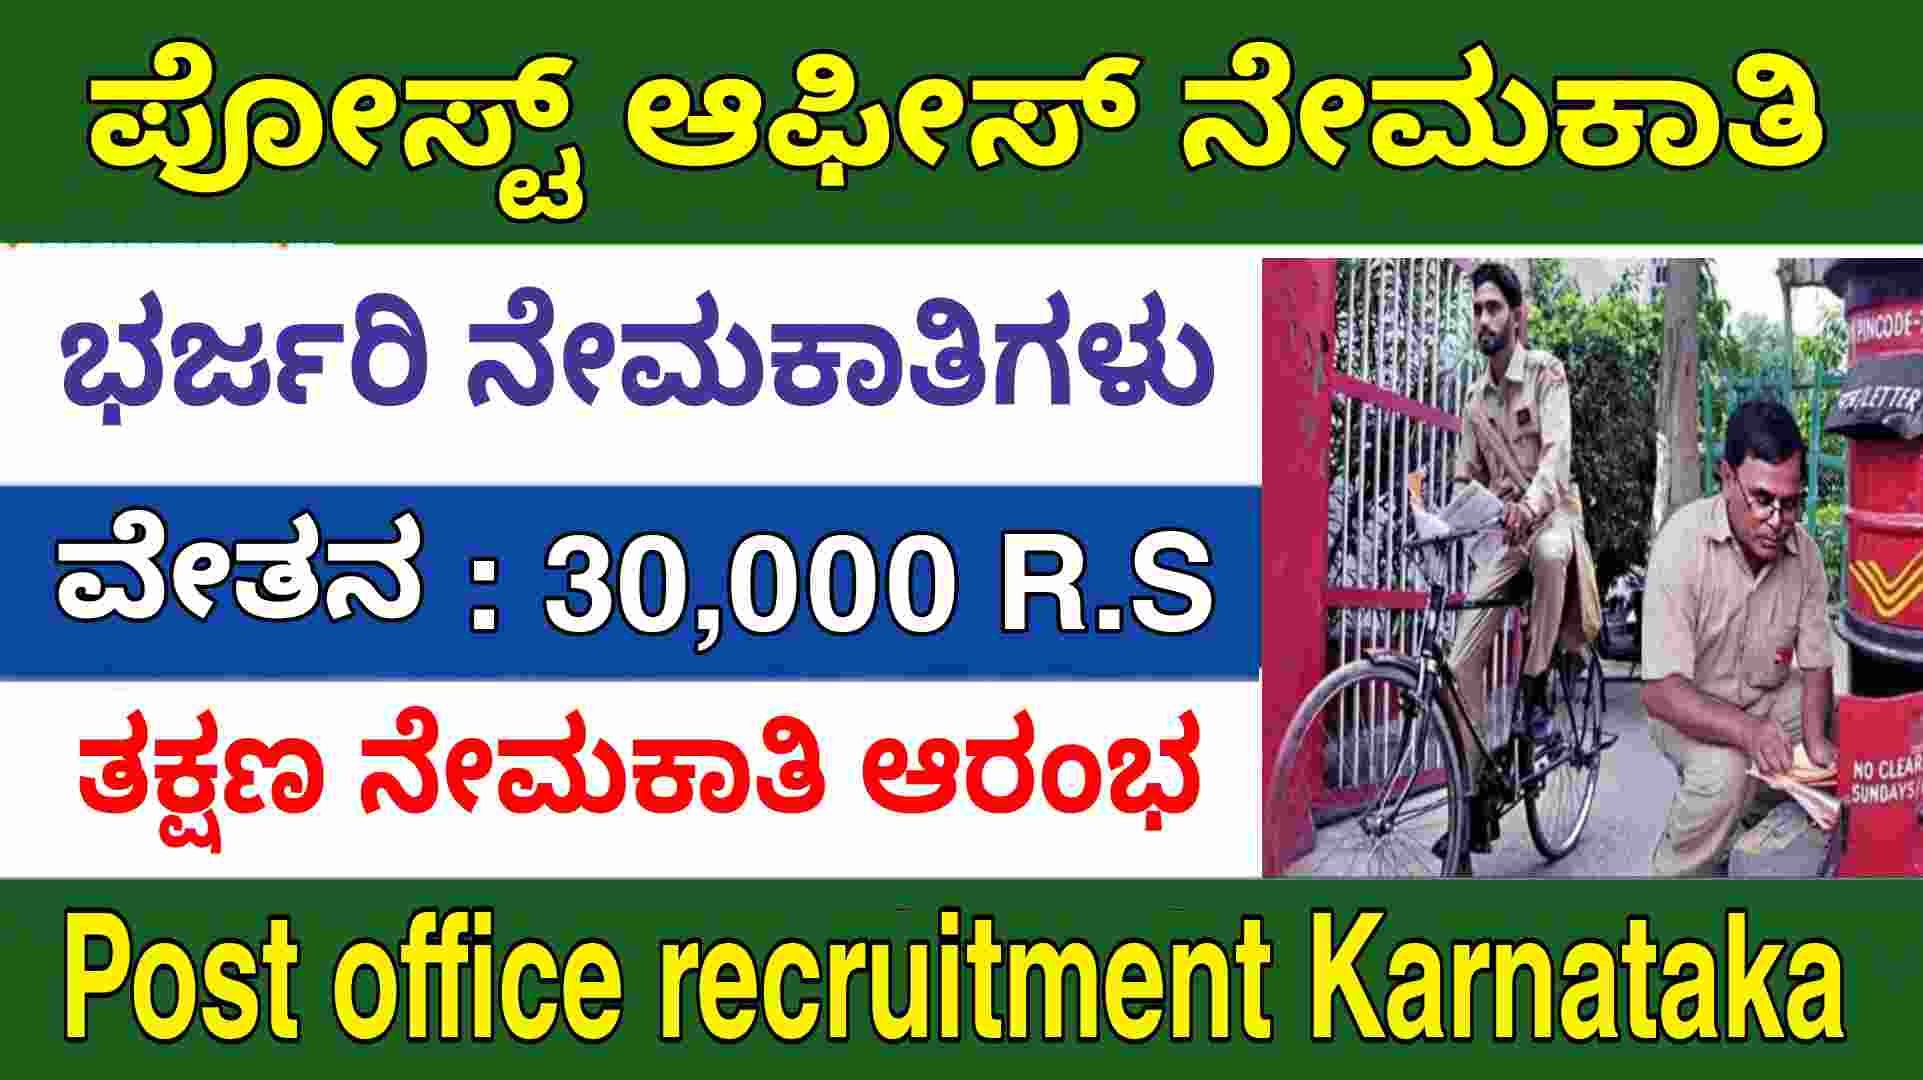 Post office recruitment Karnataka